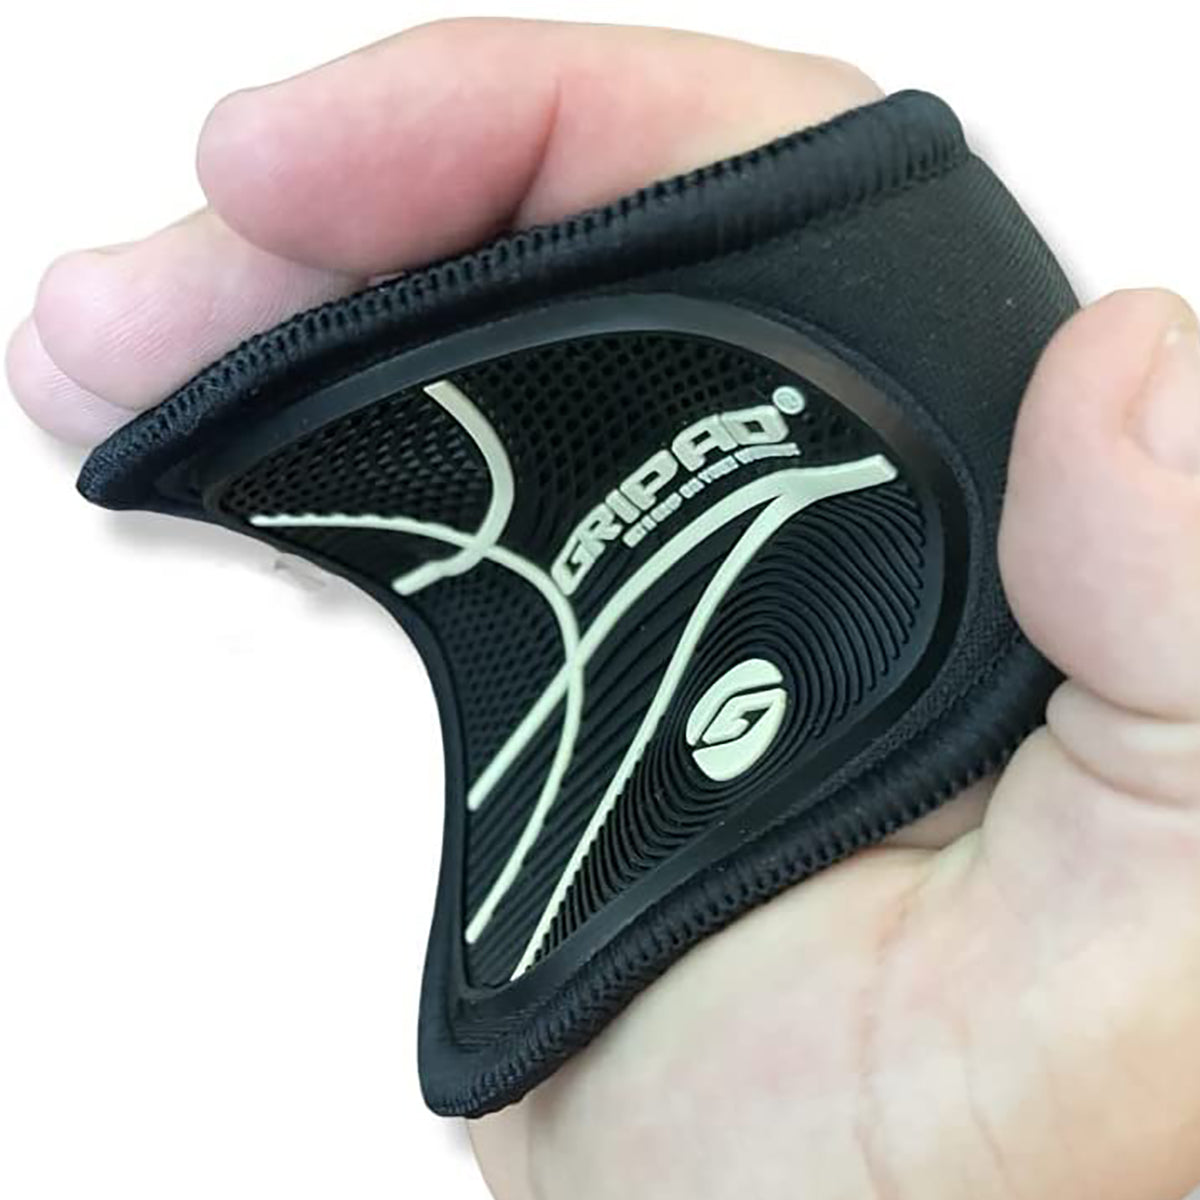 Gripad CLRX Weight Lifting Hand Grip Gloves - Black/White Gripad